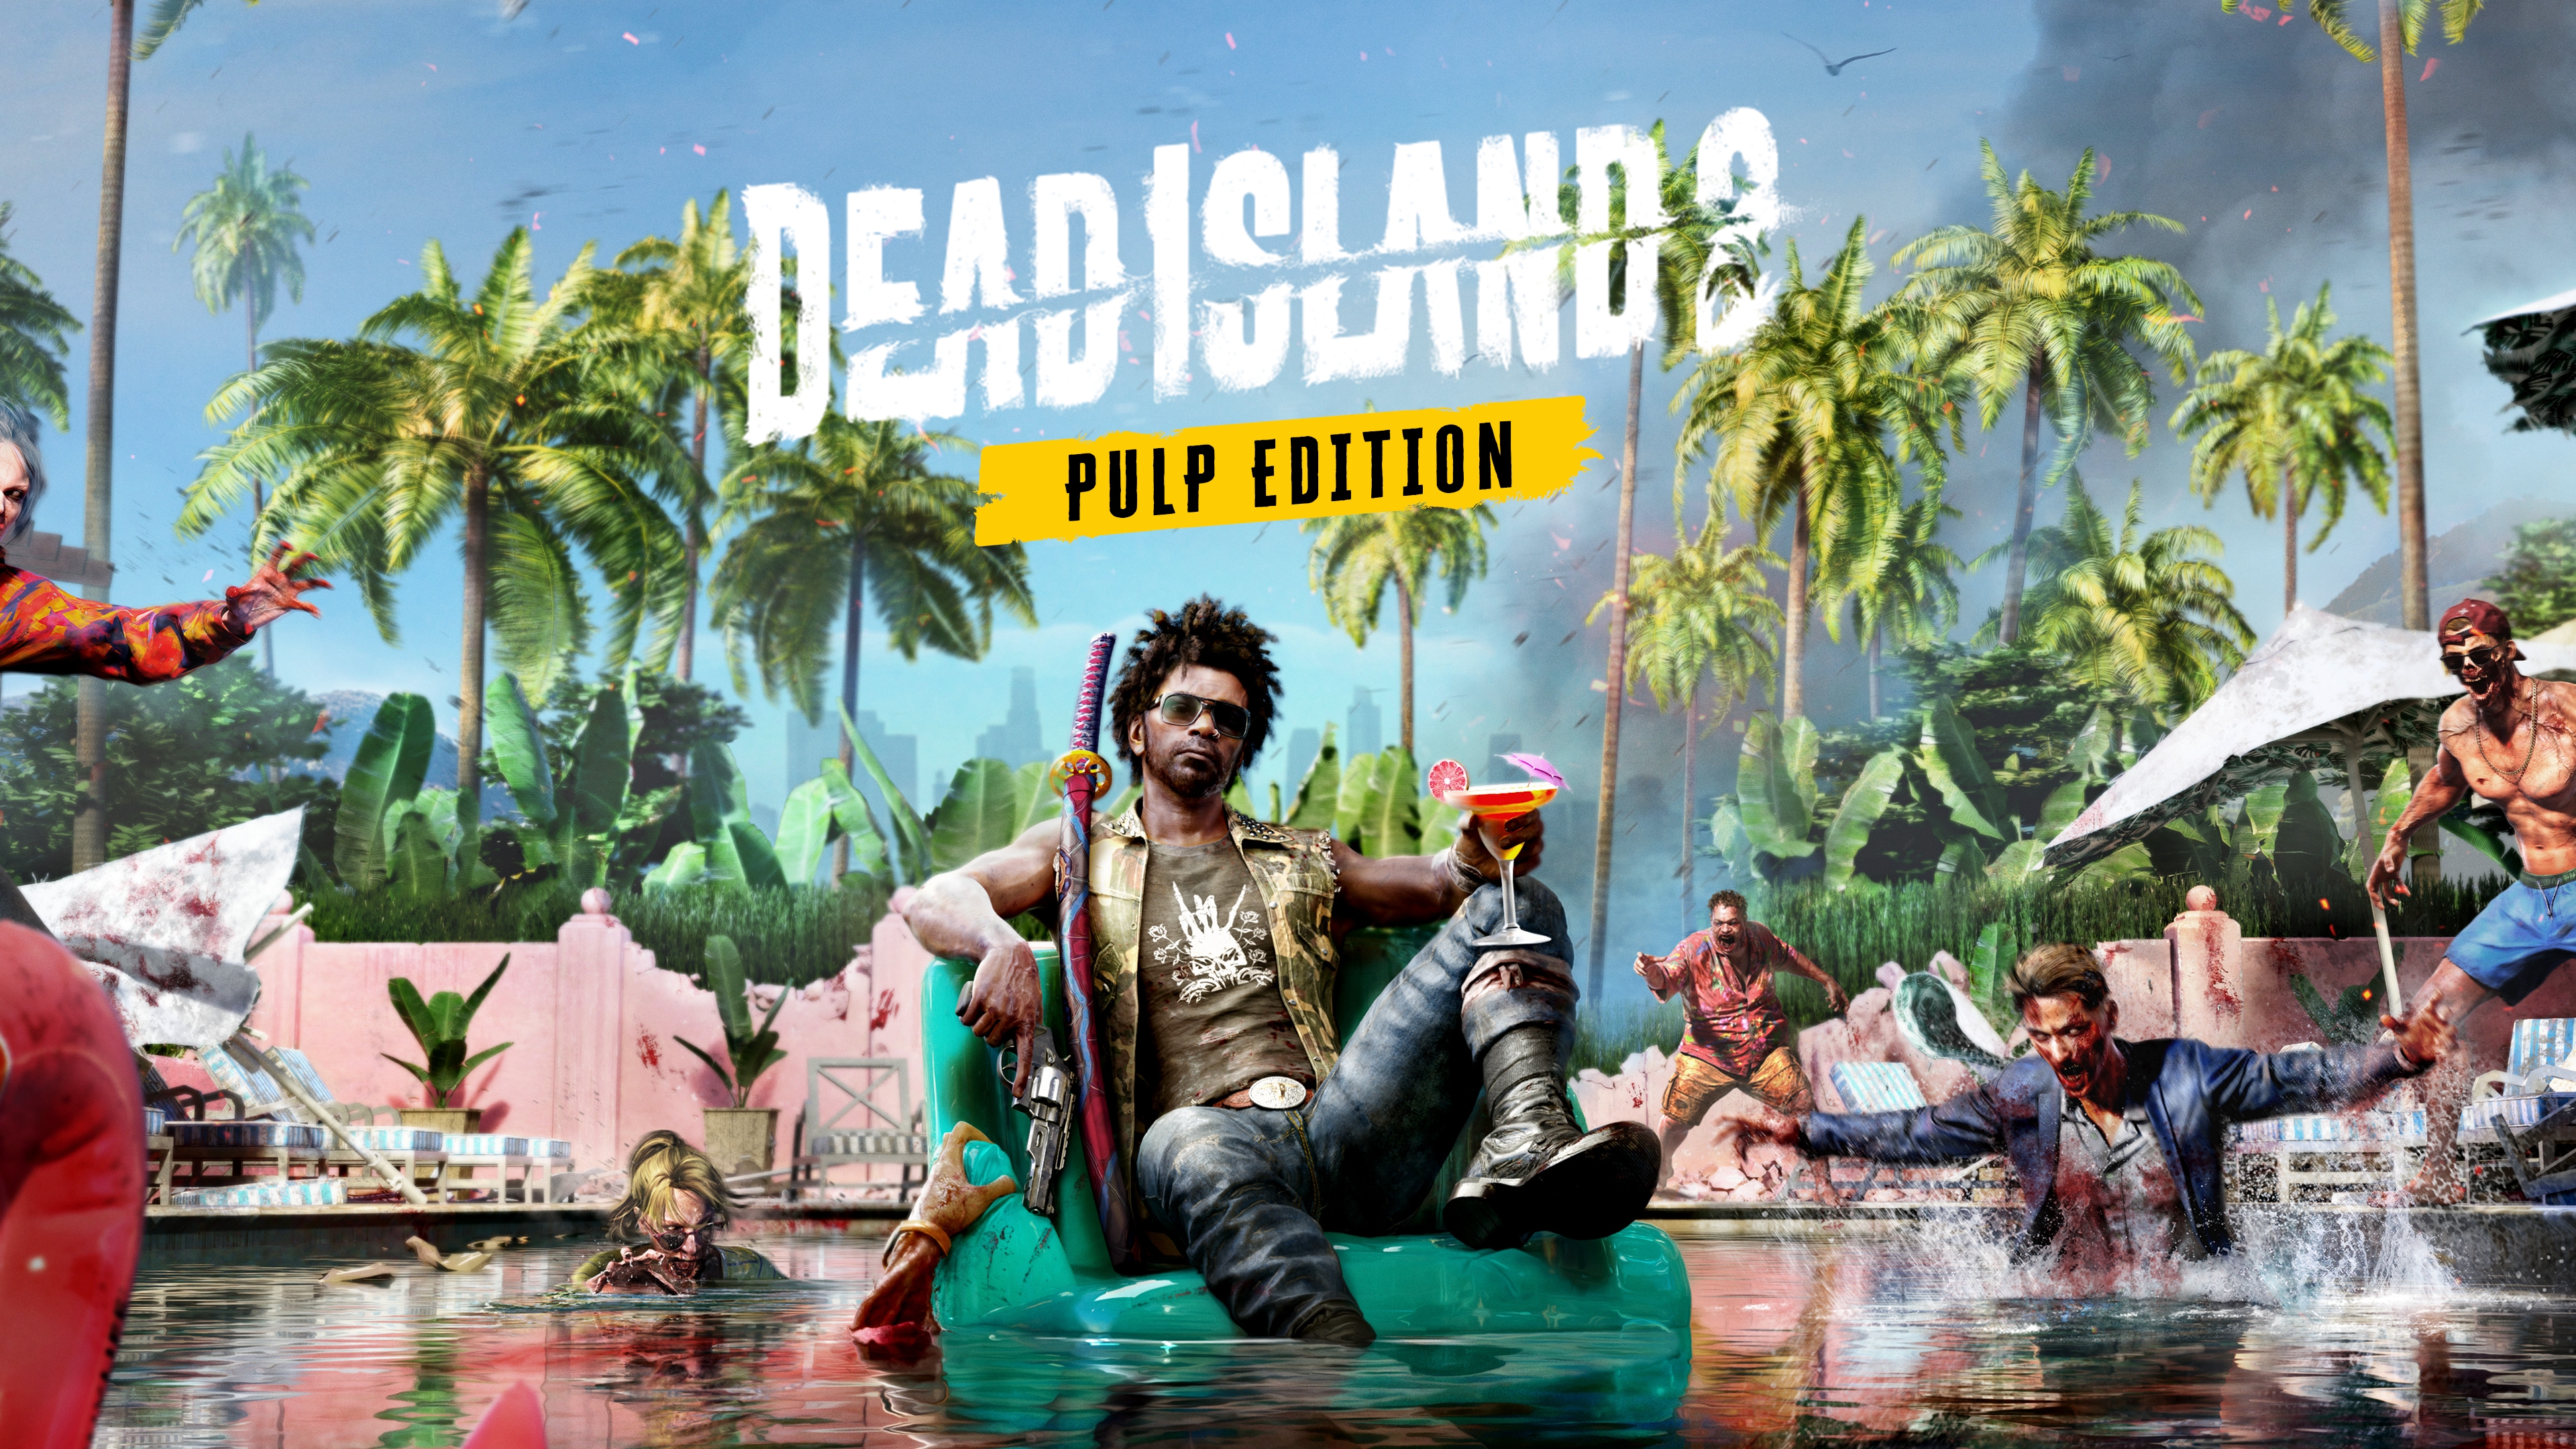 Dead Island 2 - Haus Launch Trailer